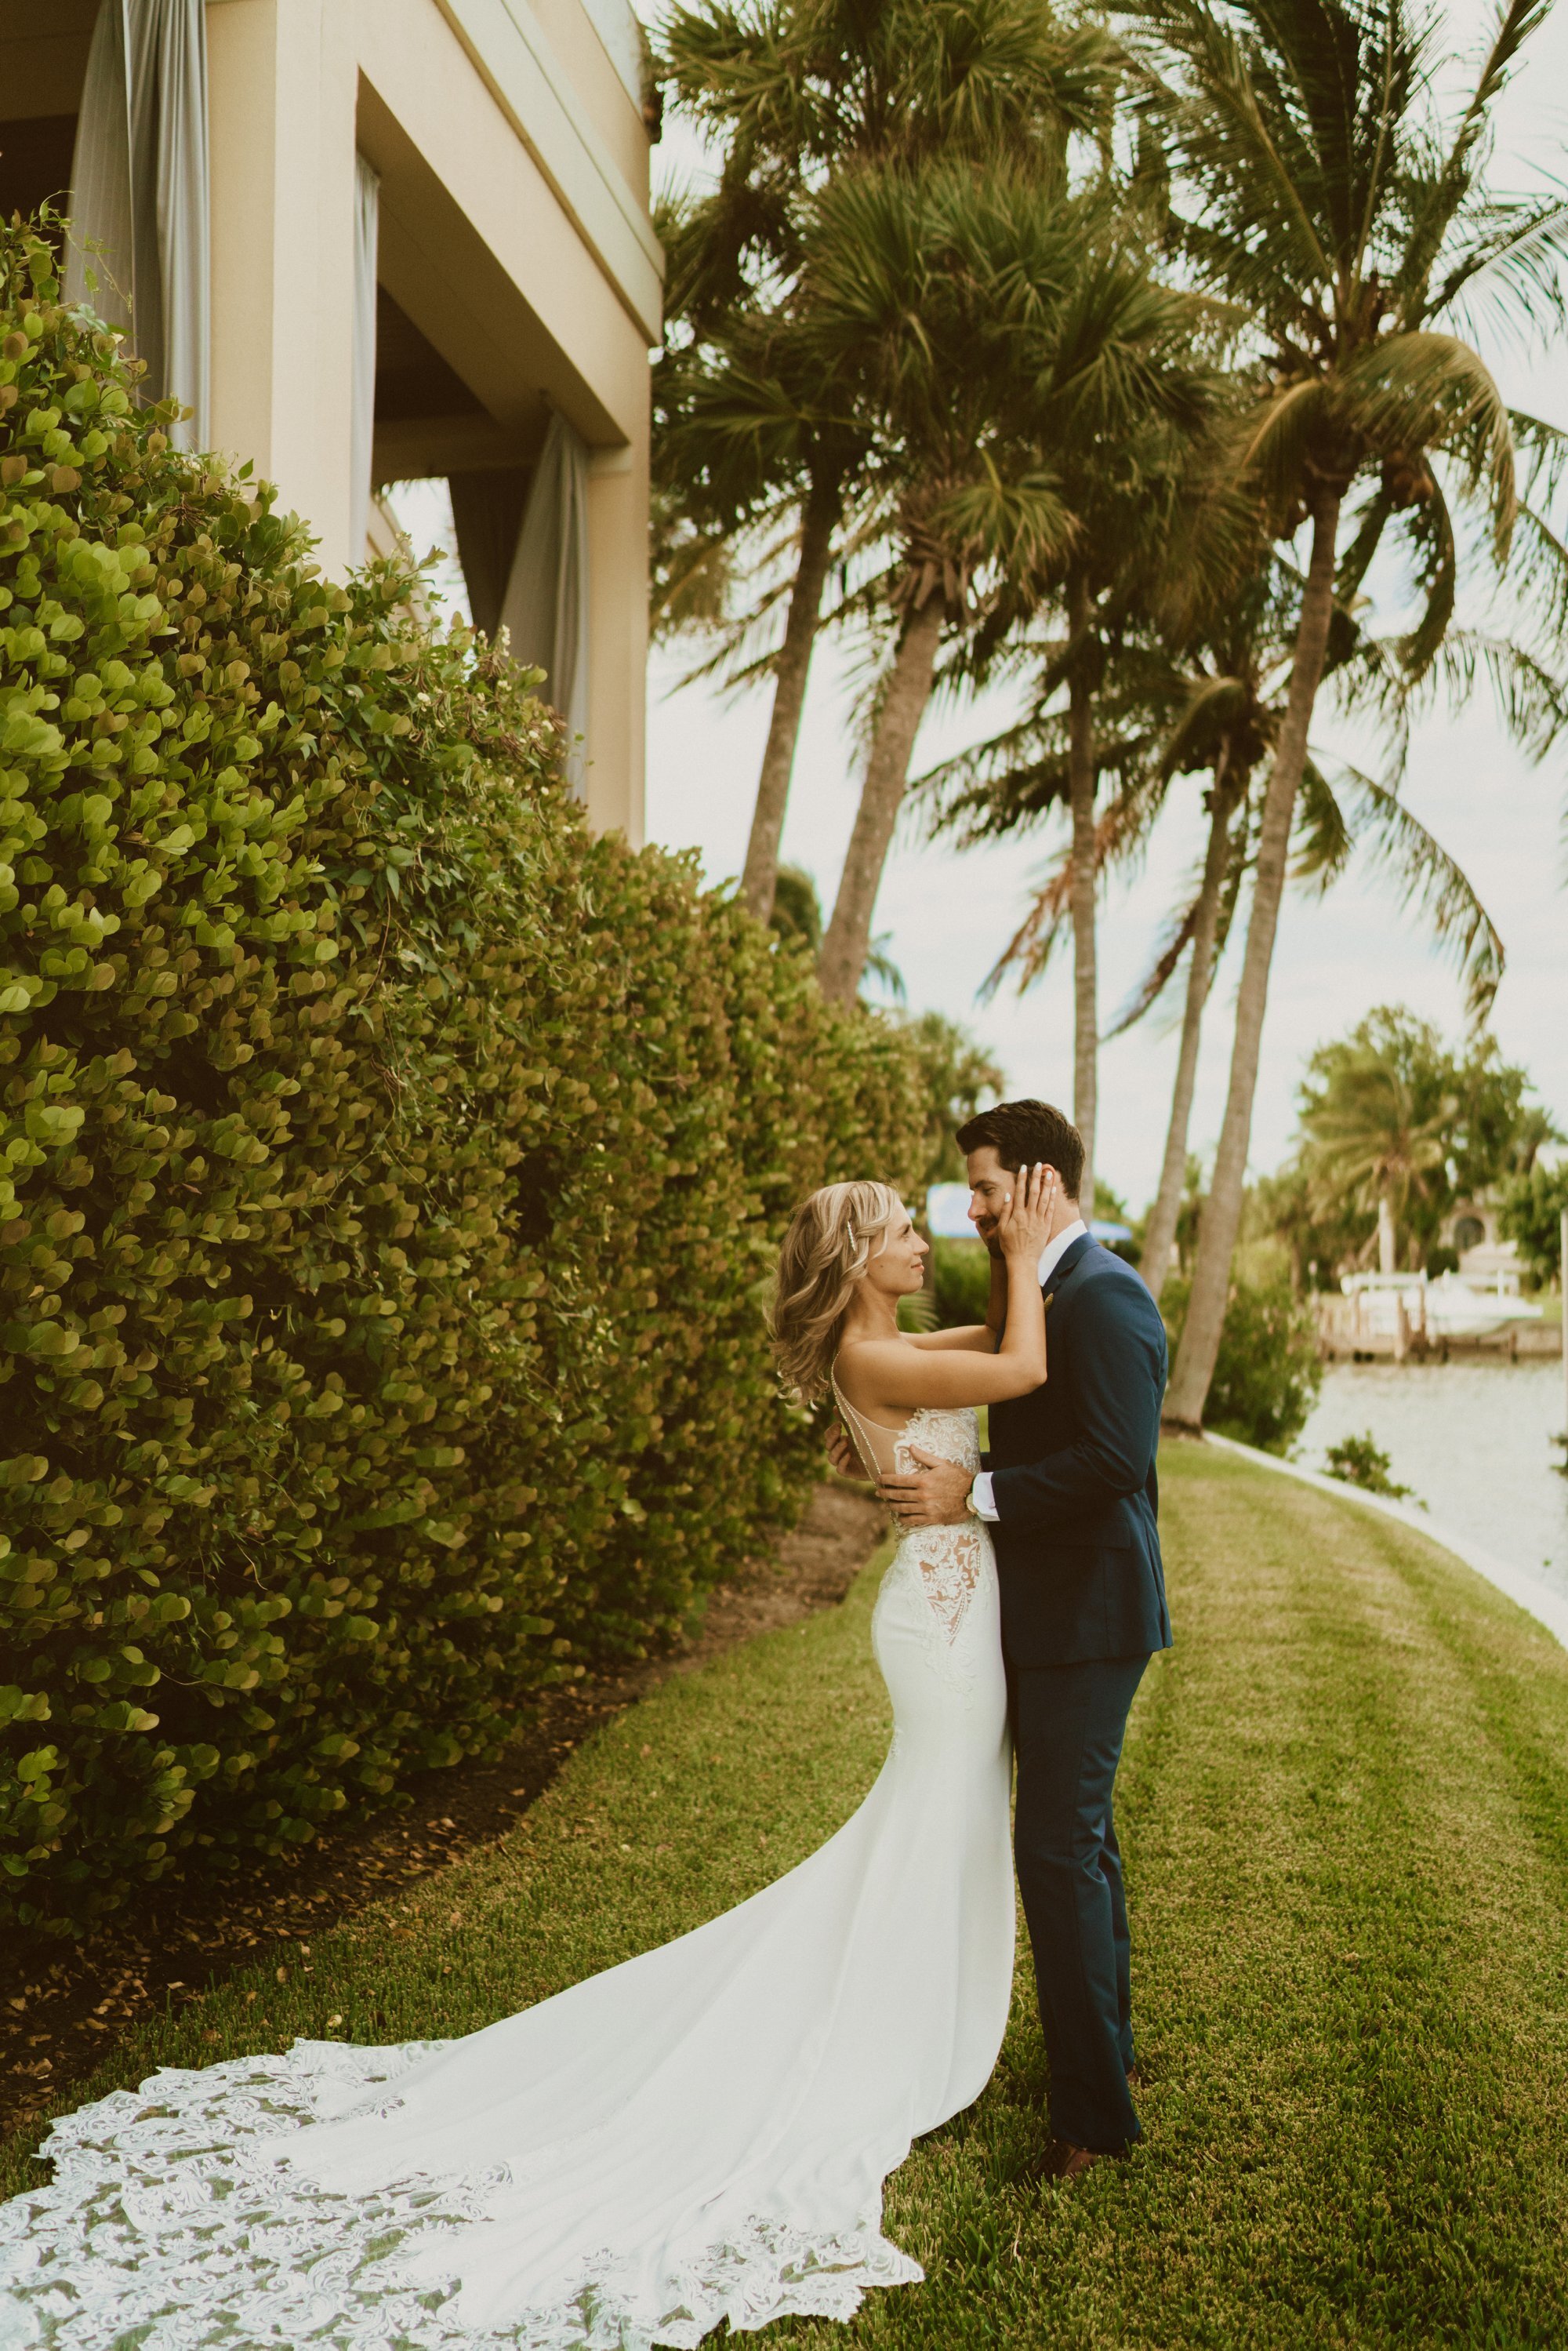 Naples beach wedding photographer capturing bride and groom 